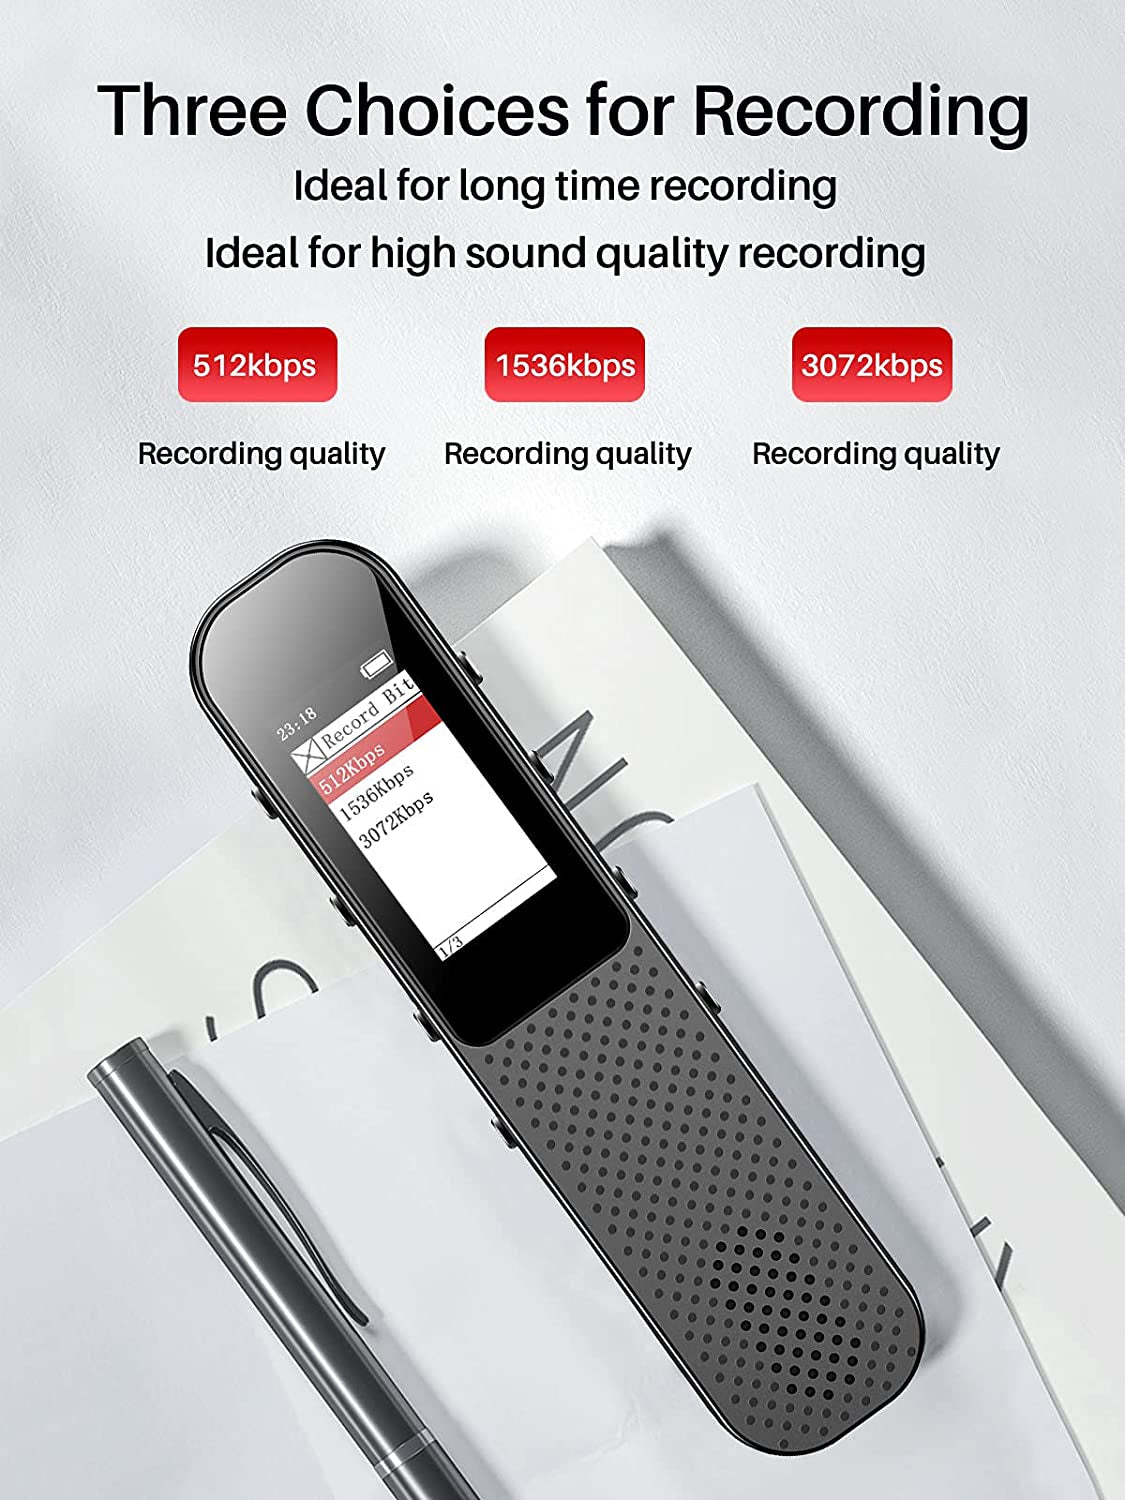 32GB Digital Voice Activated Recorder - Everyday-Sales.com